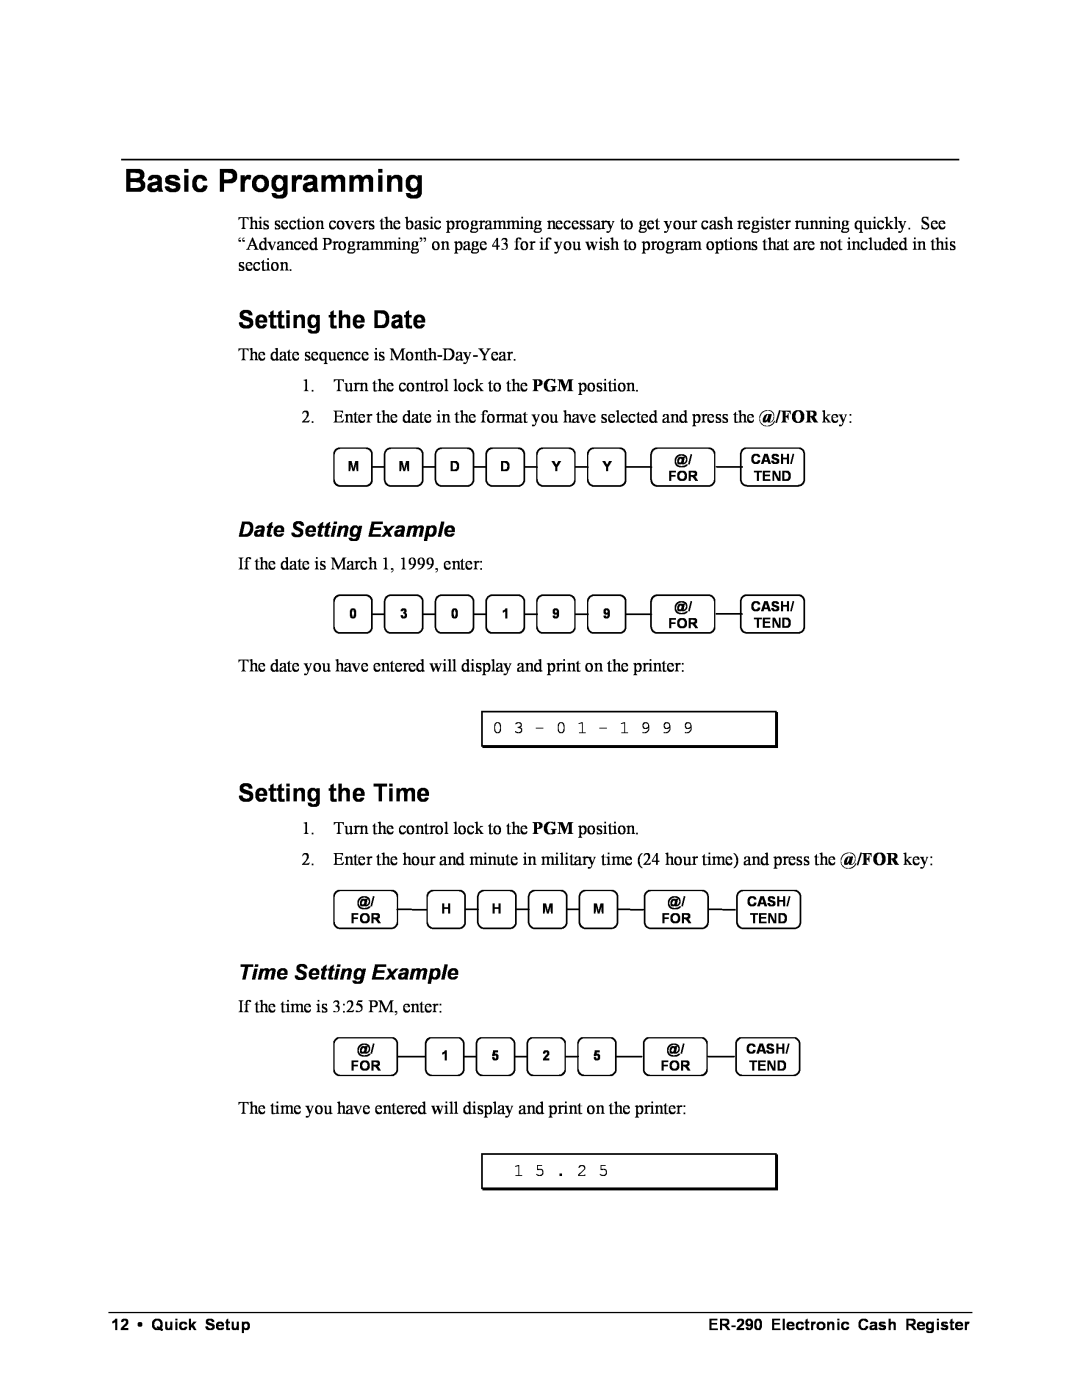 Samsung M-ER290 Basic Programming, Setting the Date, Setting the Time, Date Setting Example, Time Setting Example 